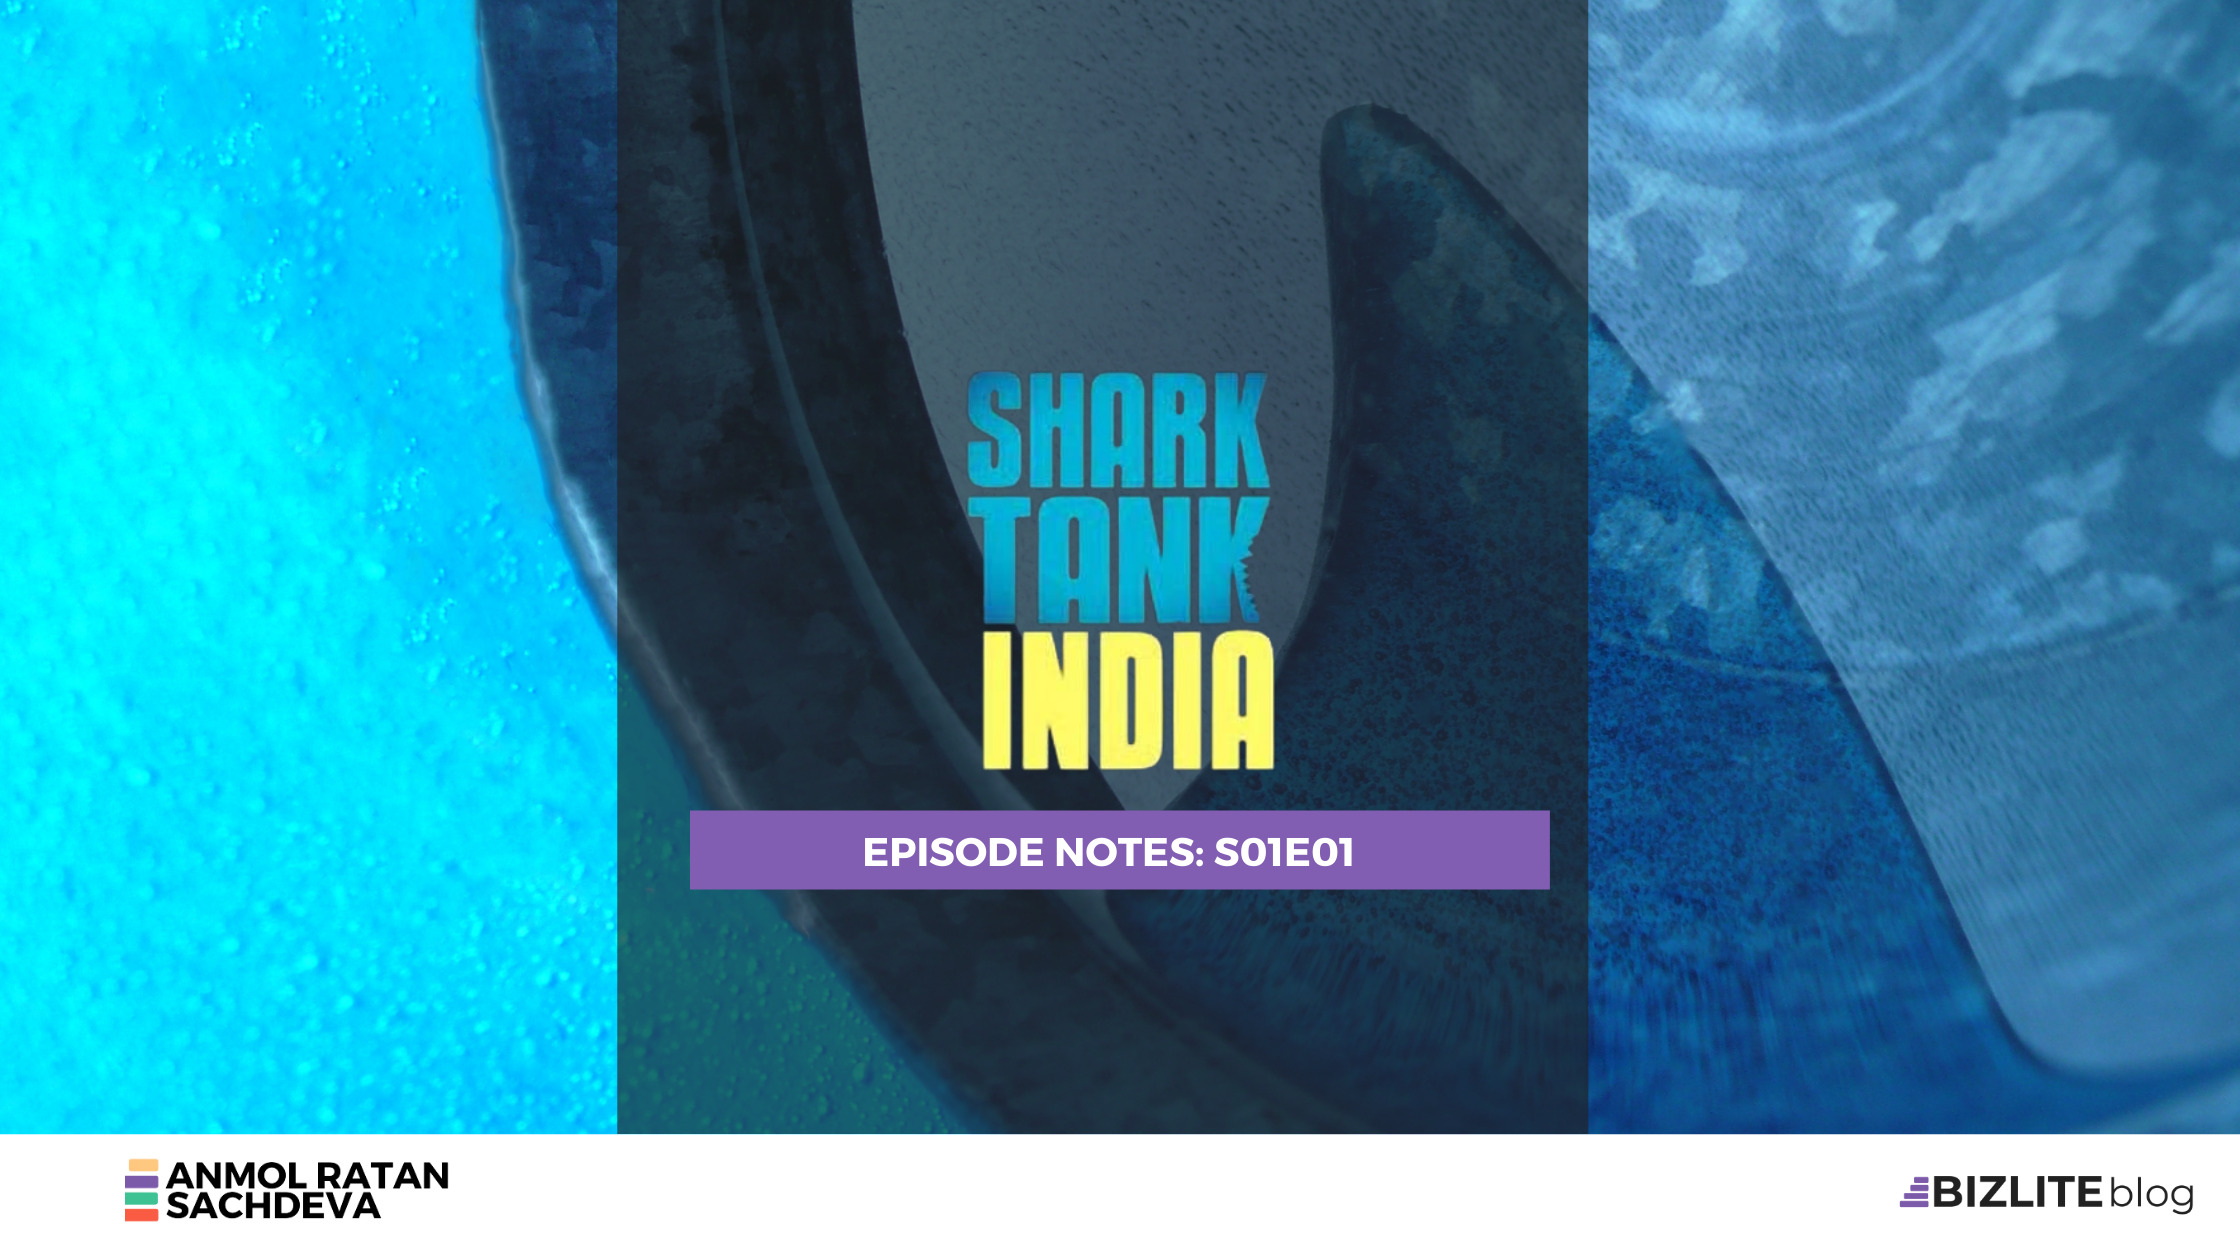 https://blog.bizlitesolutions.com/media/posts/40/Shark-Tank-India-Episode-1-Updates.png